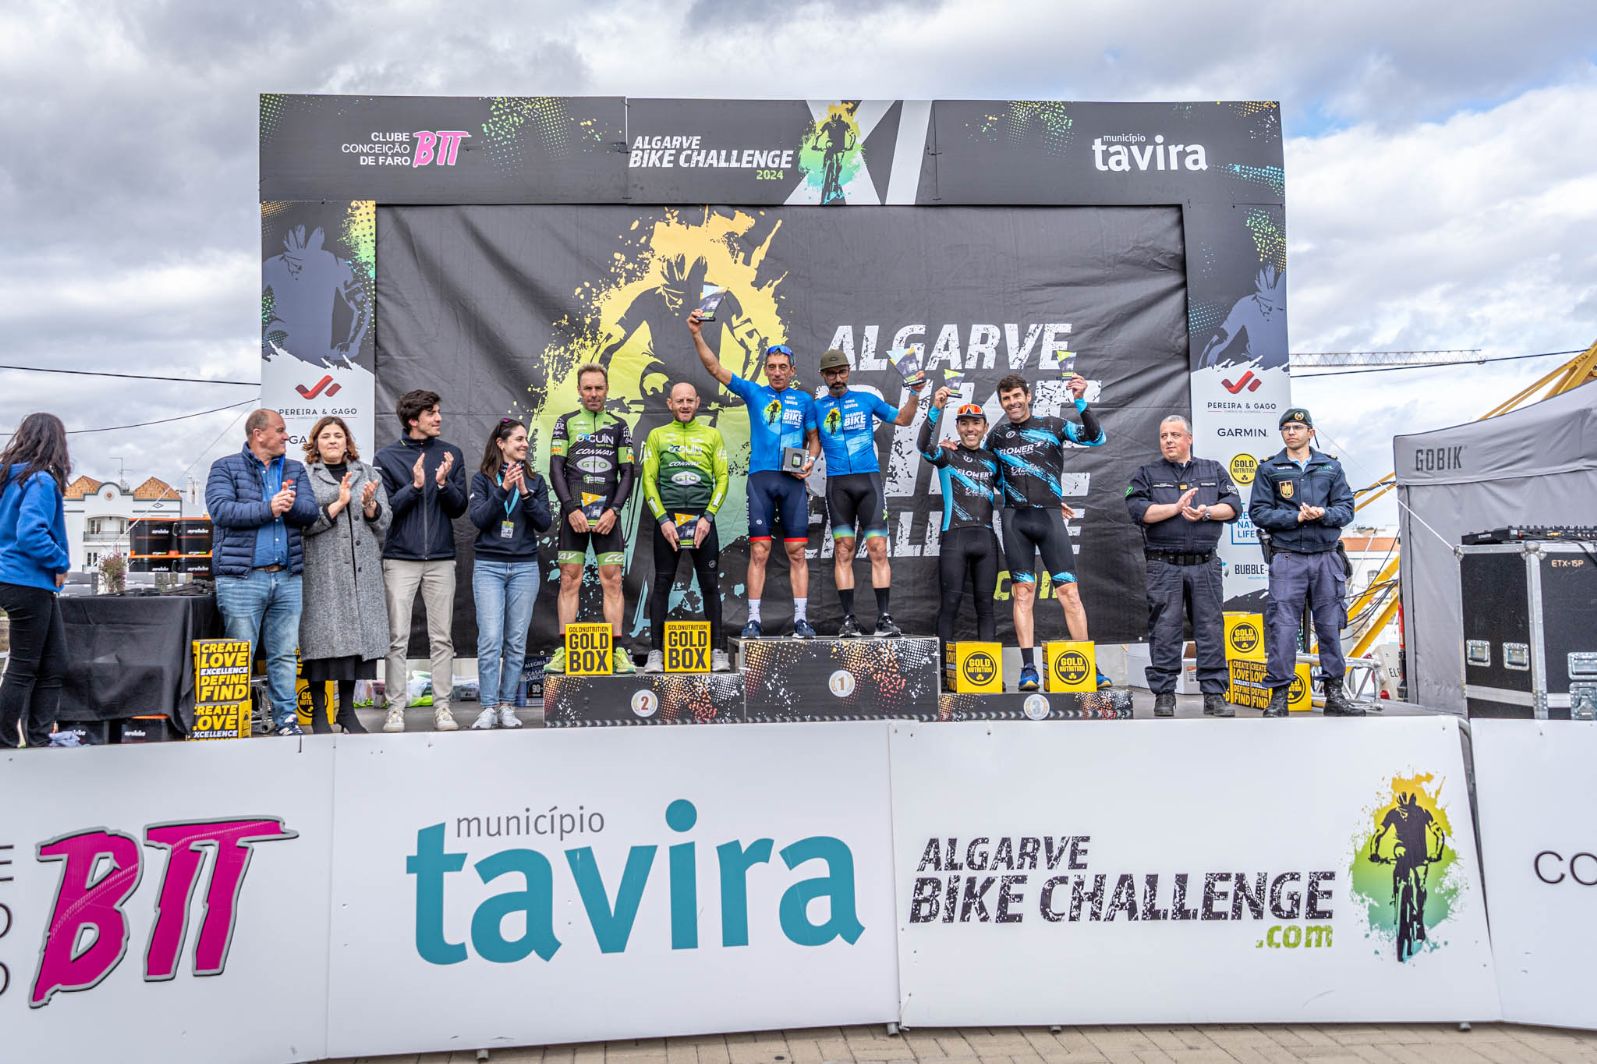 Algarve Bike Challenge: Os lusos Ramos e Mota surpreendem na última etapa e vencem o Algarve Bike Challenge